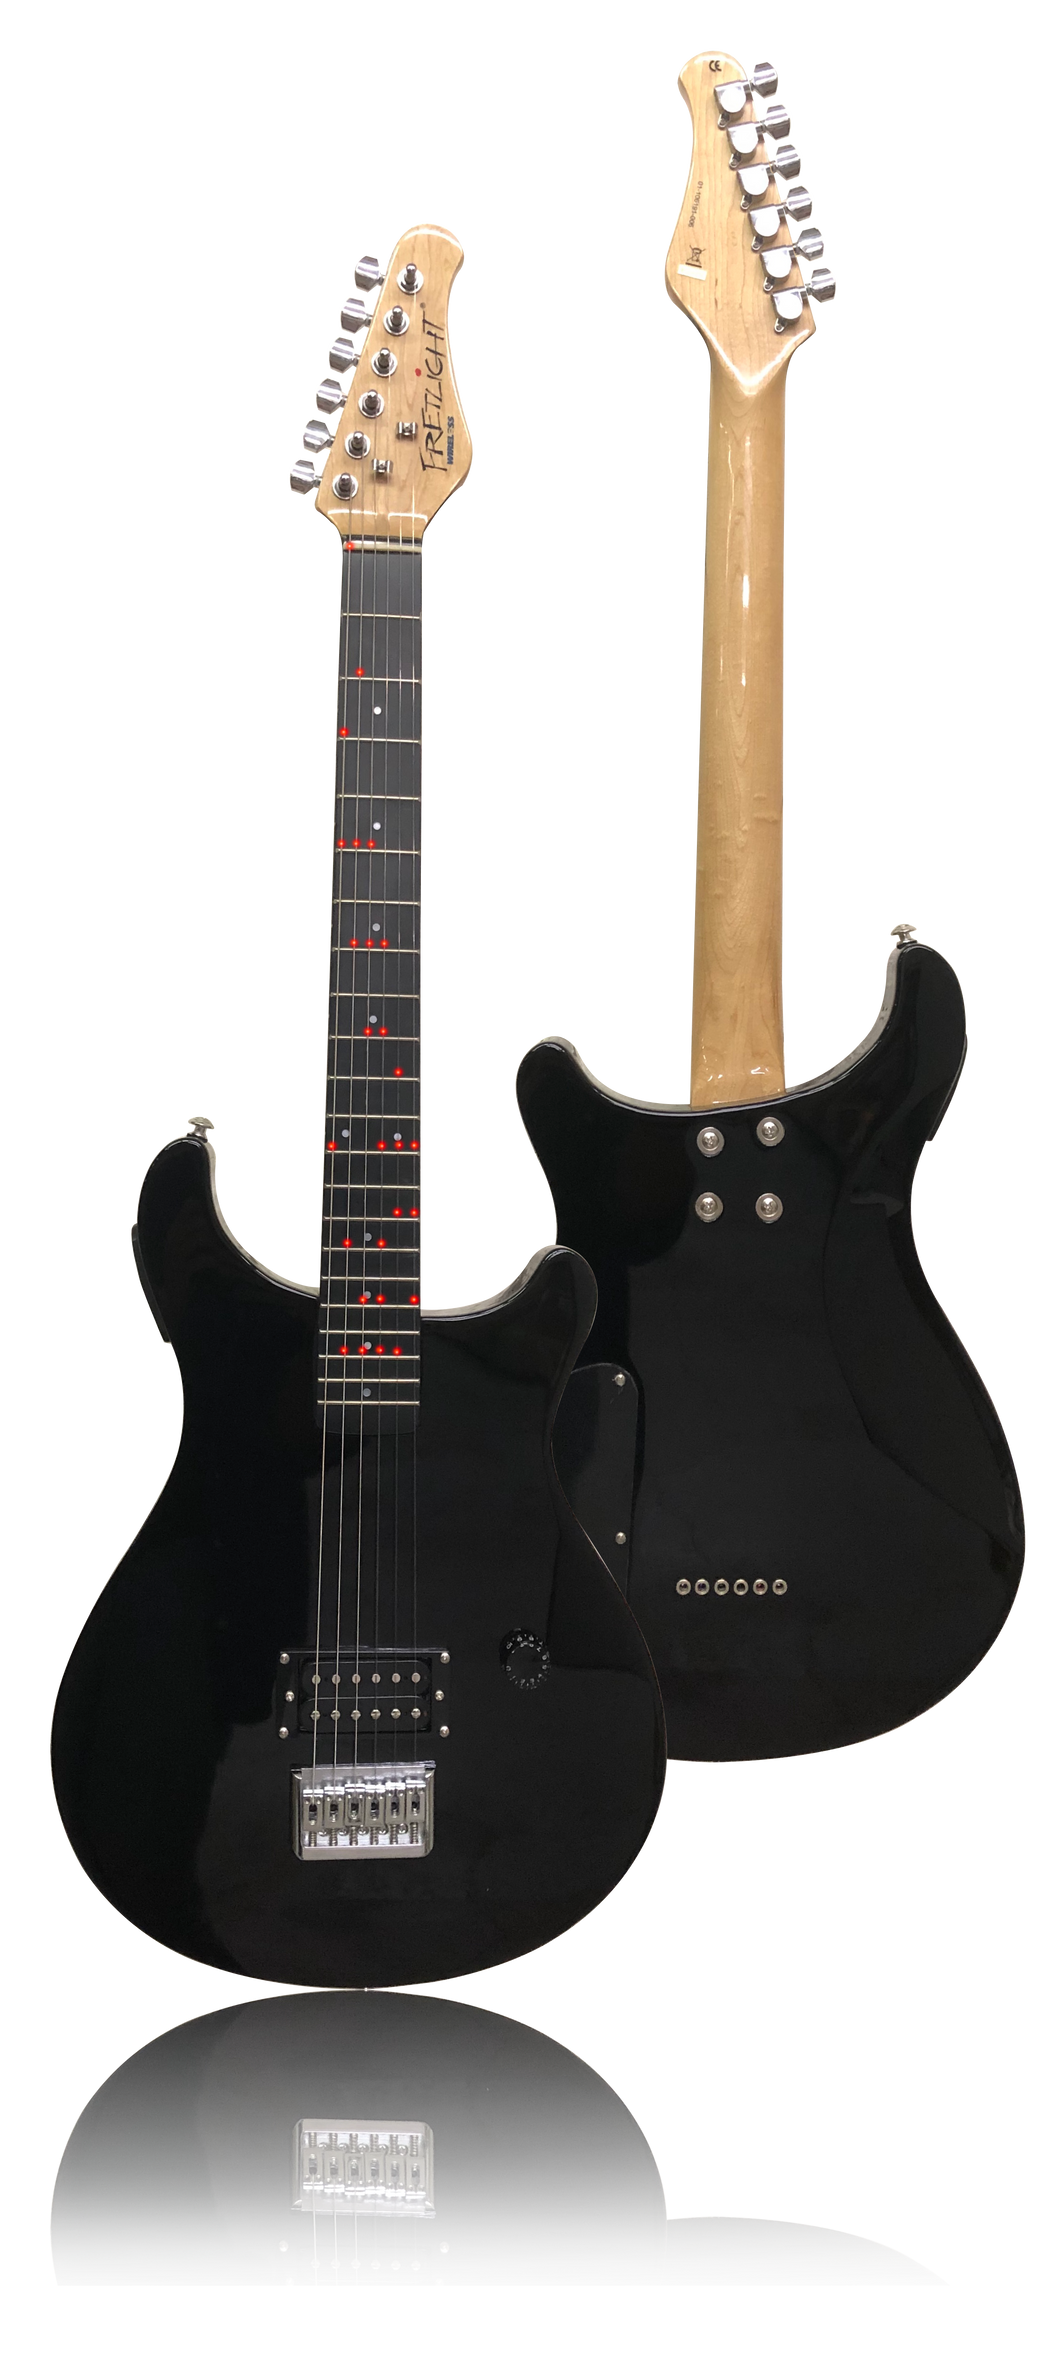 FG-611T Beginner Wireless Electric Guitar - The Fretlight Guitar Store